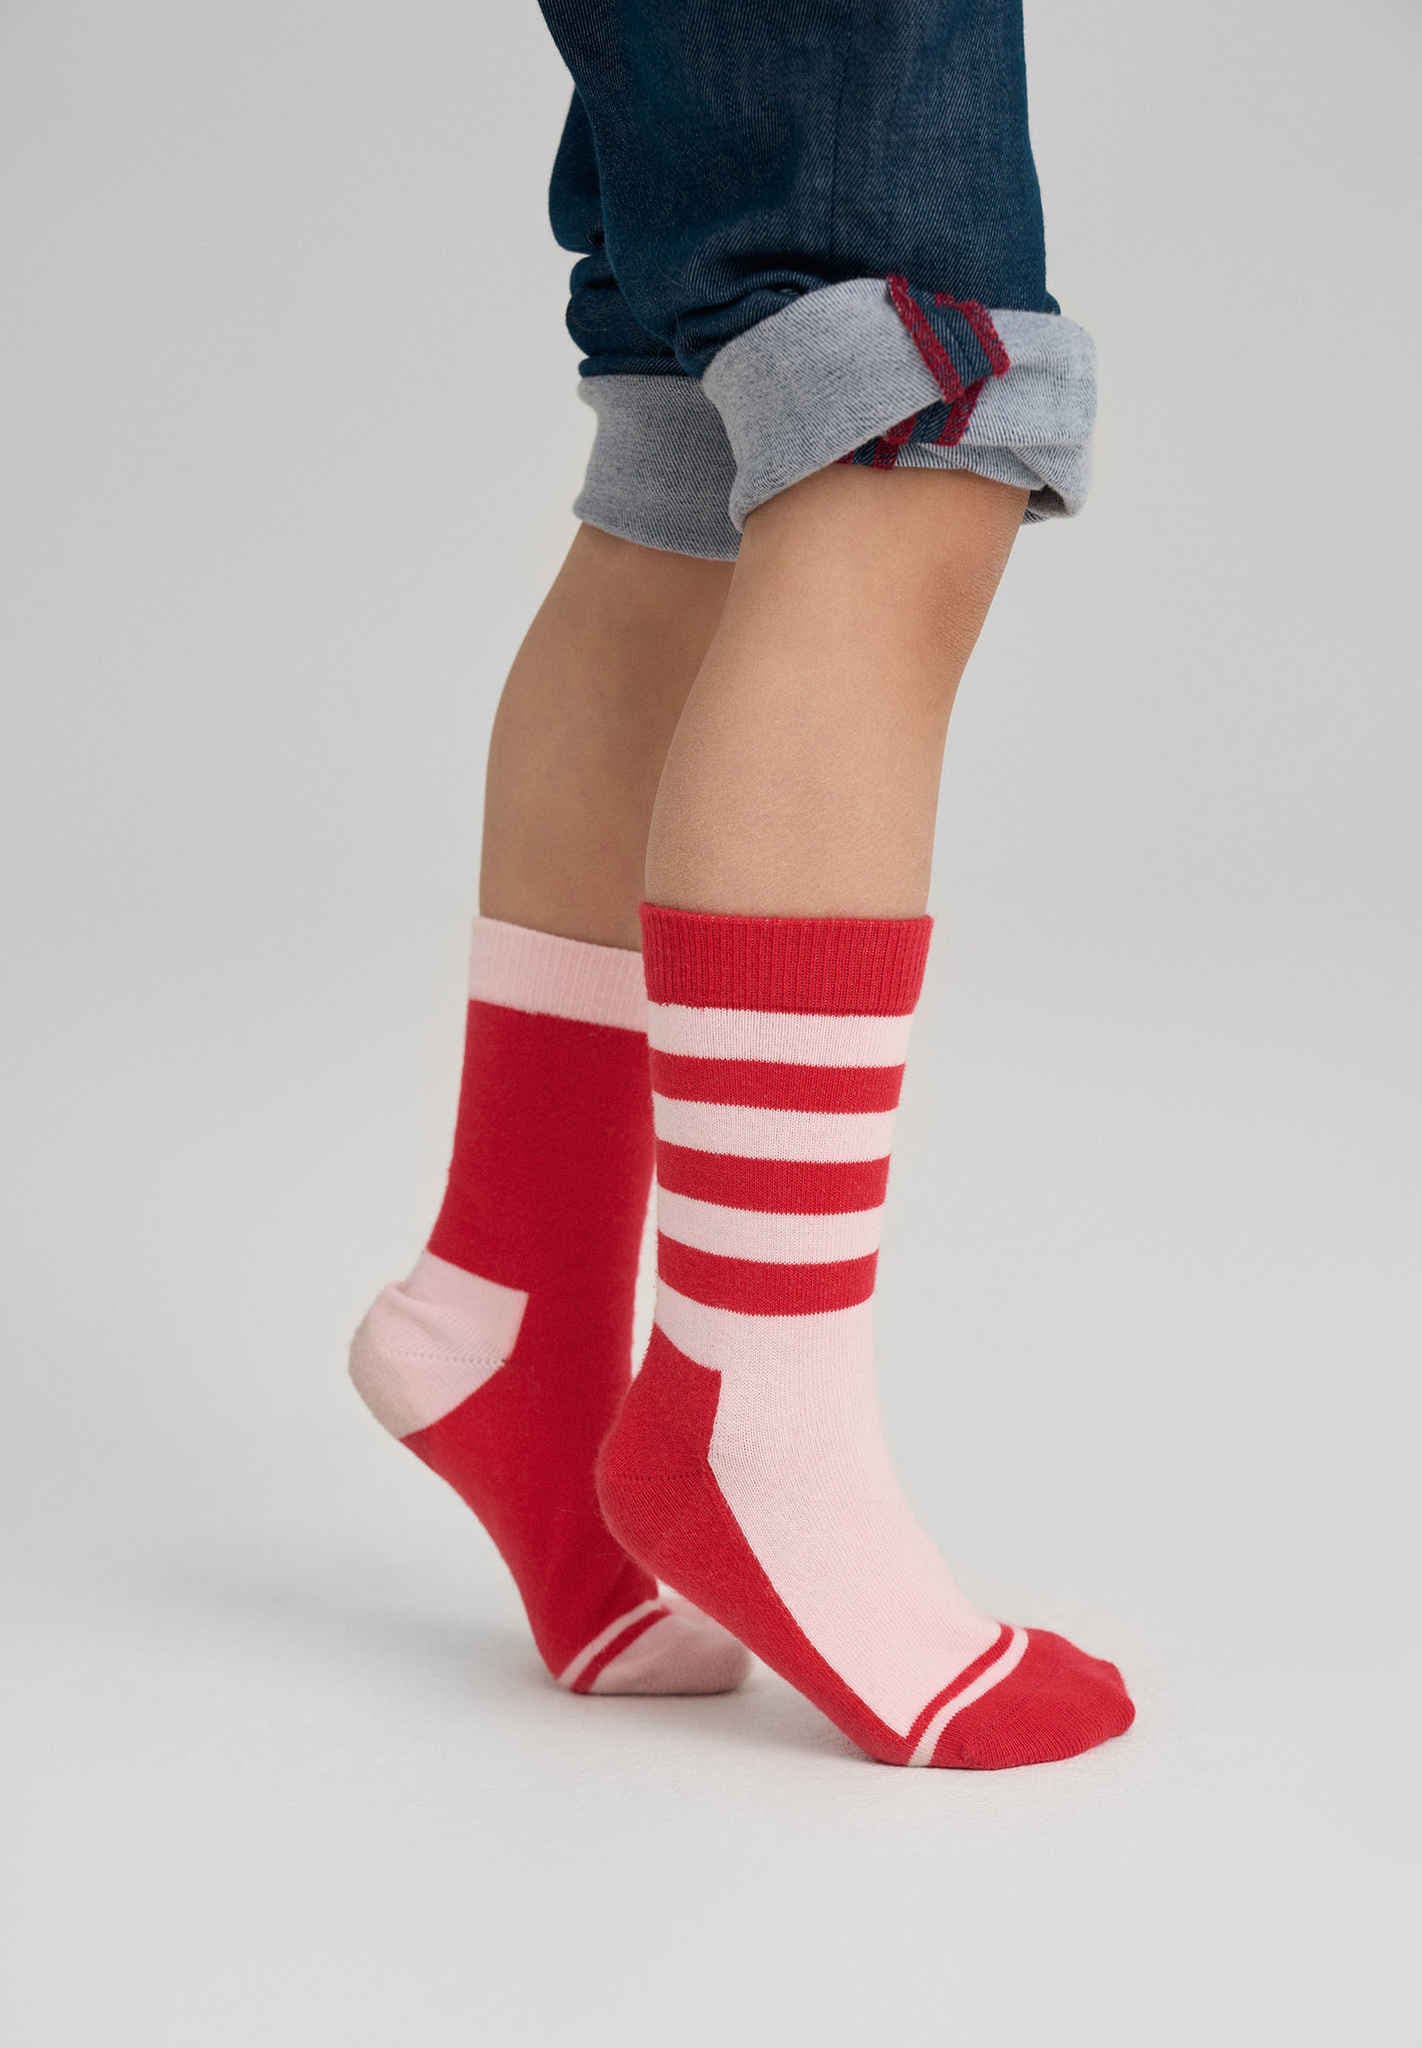 2-balenie ponožiek Reima Liito